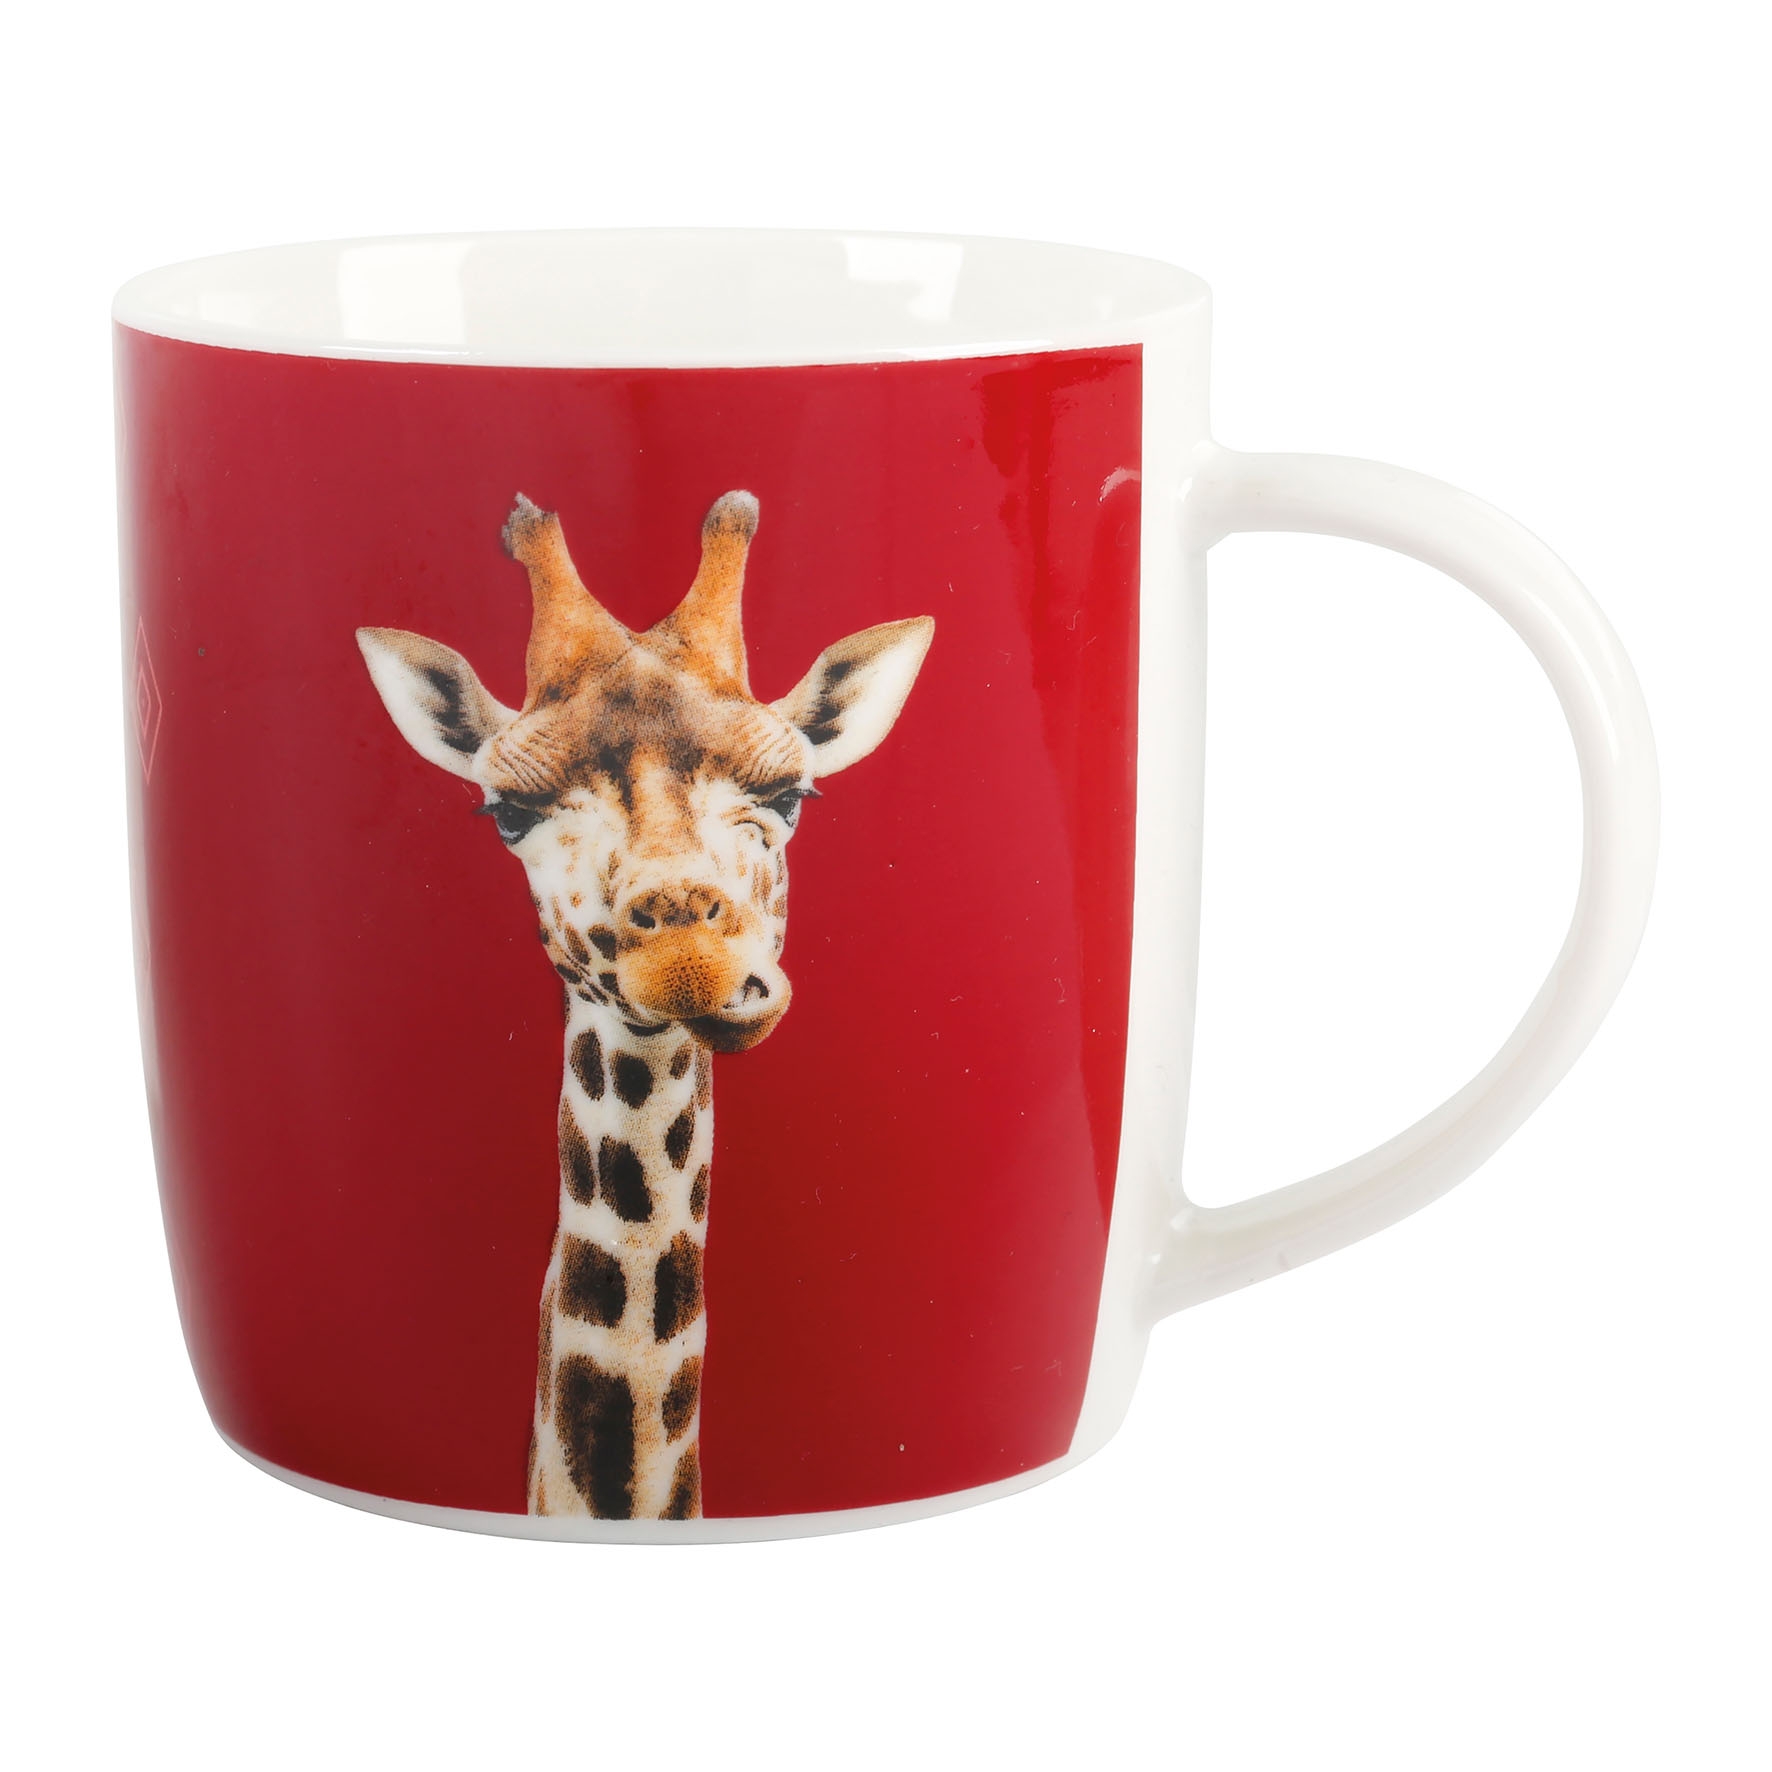 Sitram Κούπα Giraffe Red Sitram 330ml SR00527751 (Σετ 6 Τεμάχια) (Χρώμα: Κόκκινο) - Sitram - SR00527751